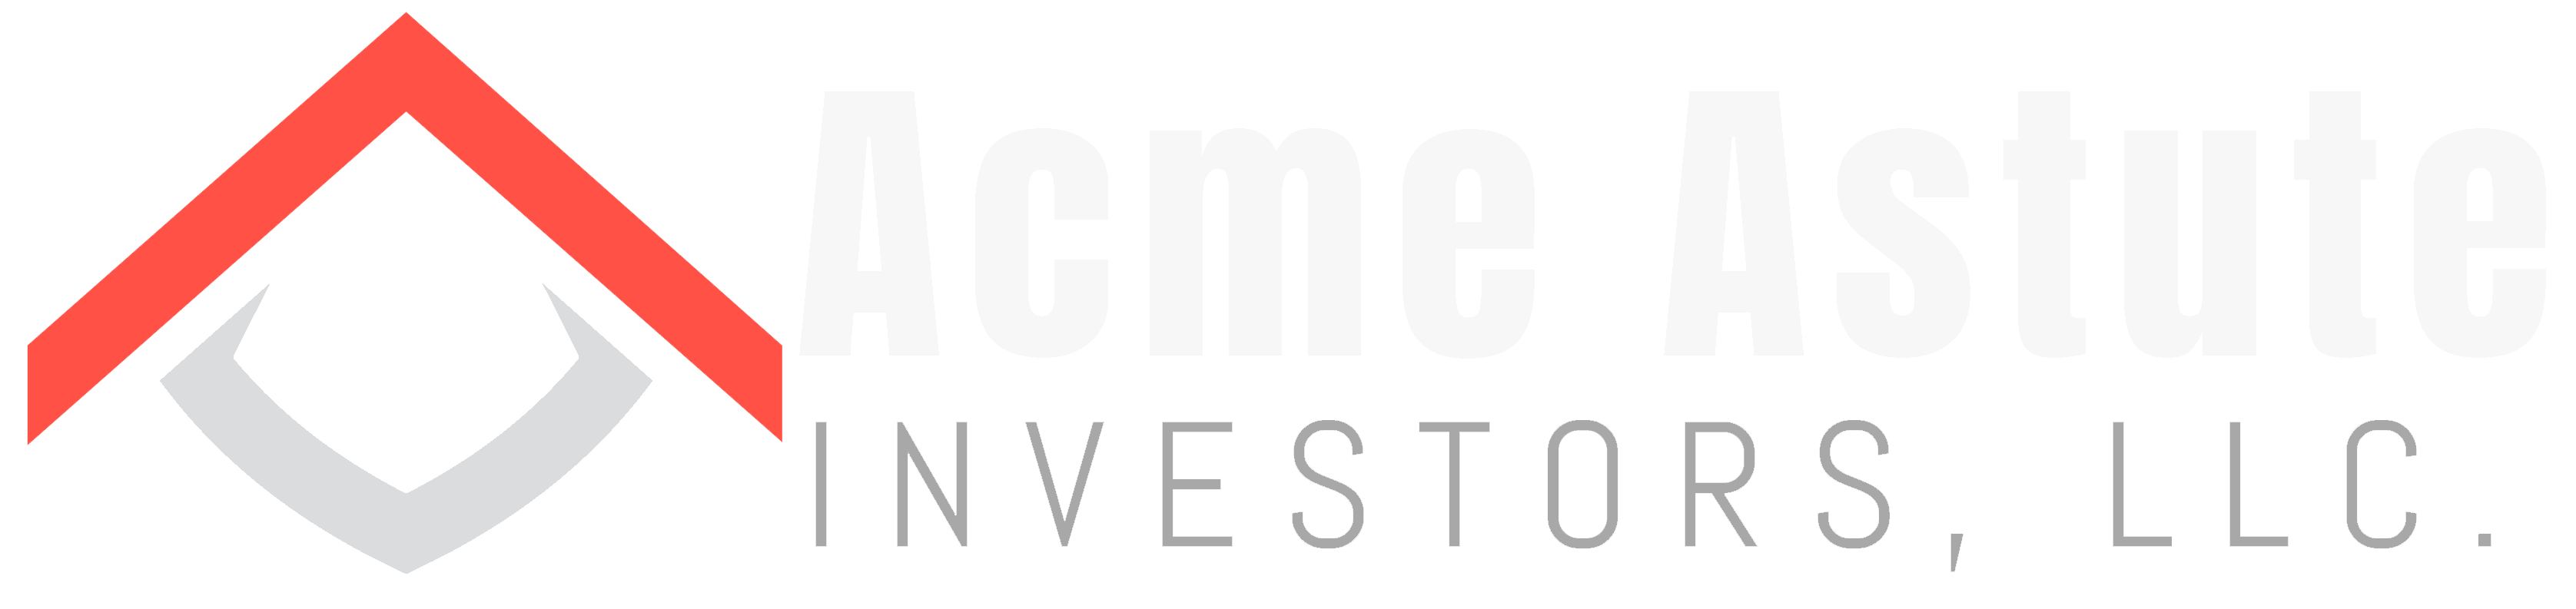 Acme Astute Investors LLCAbout us